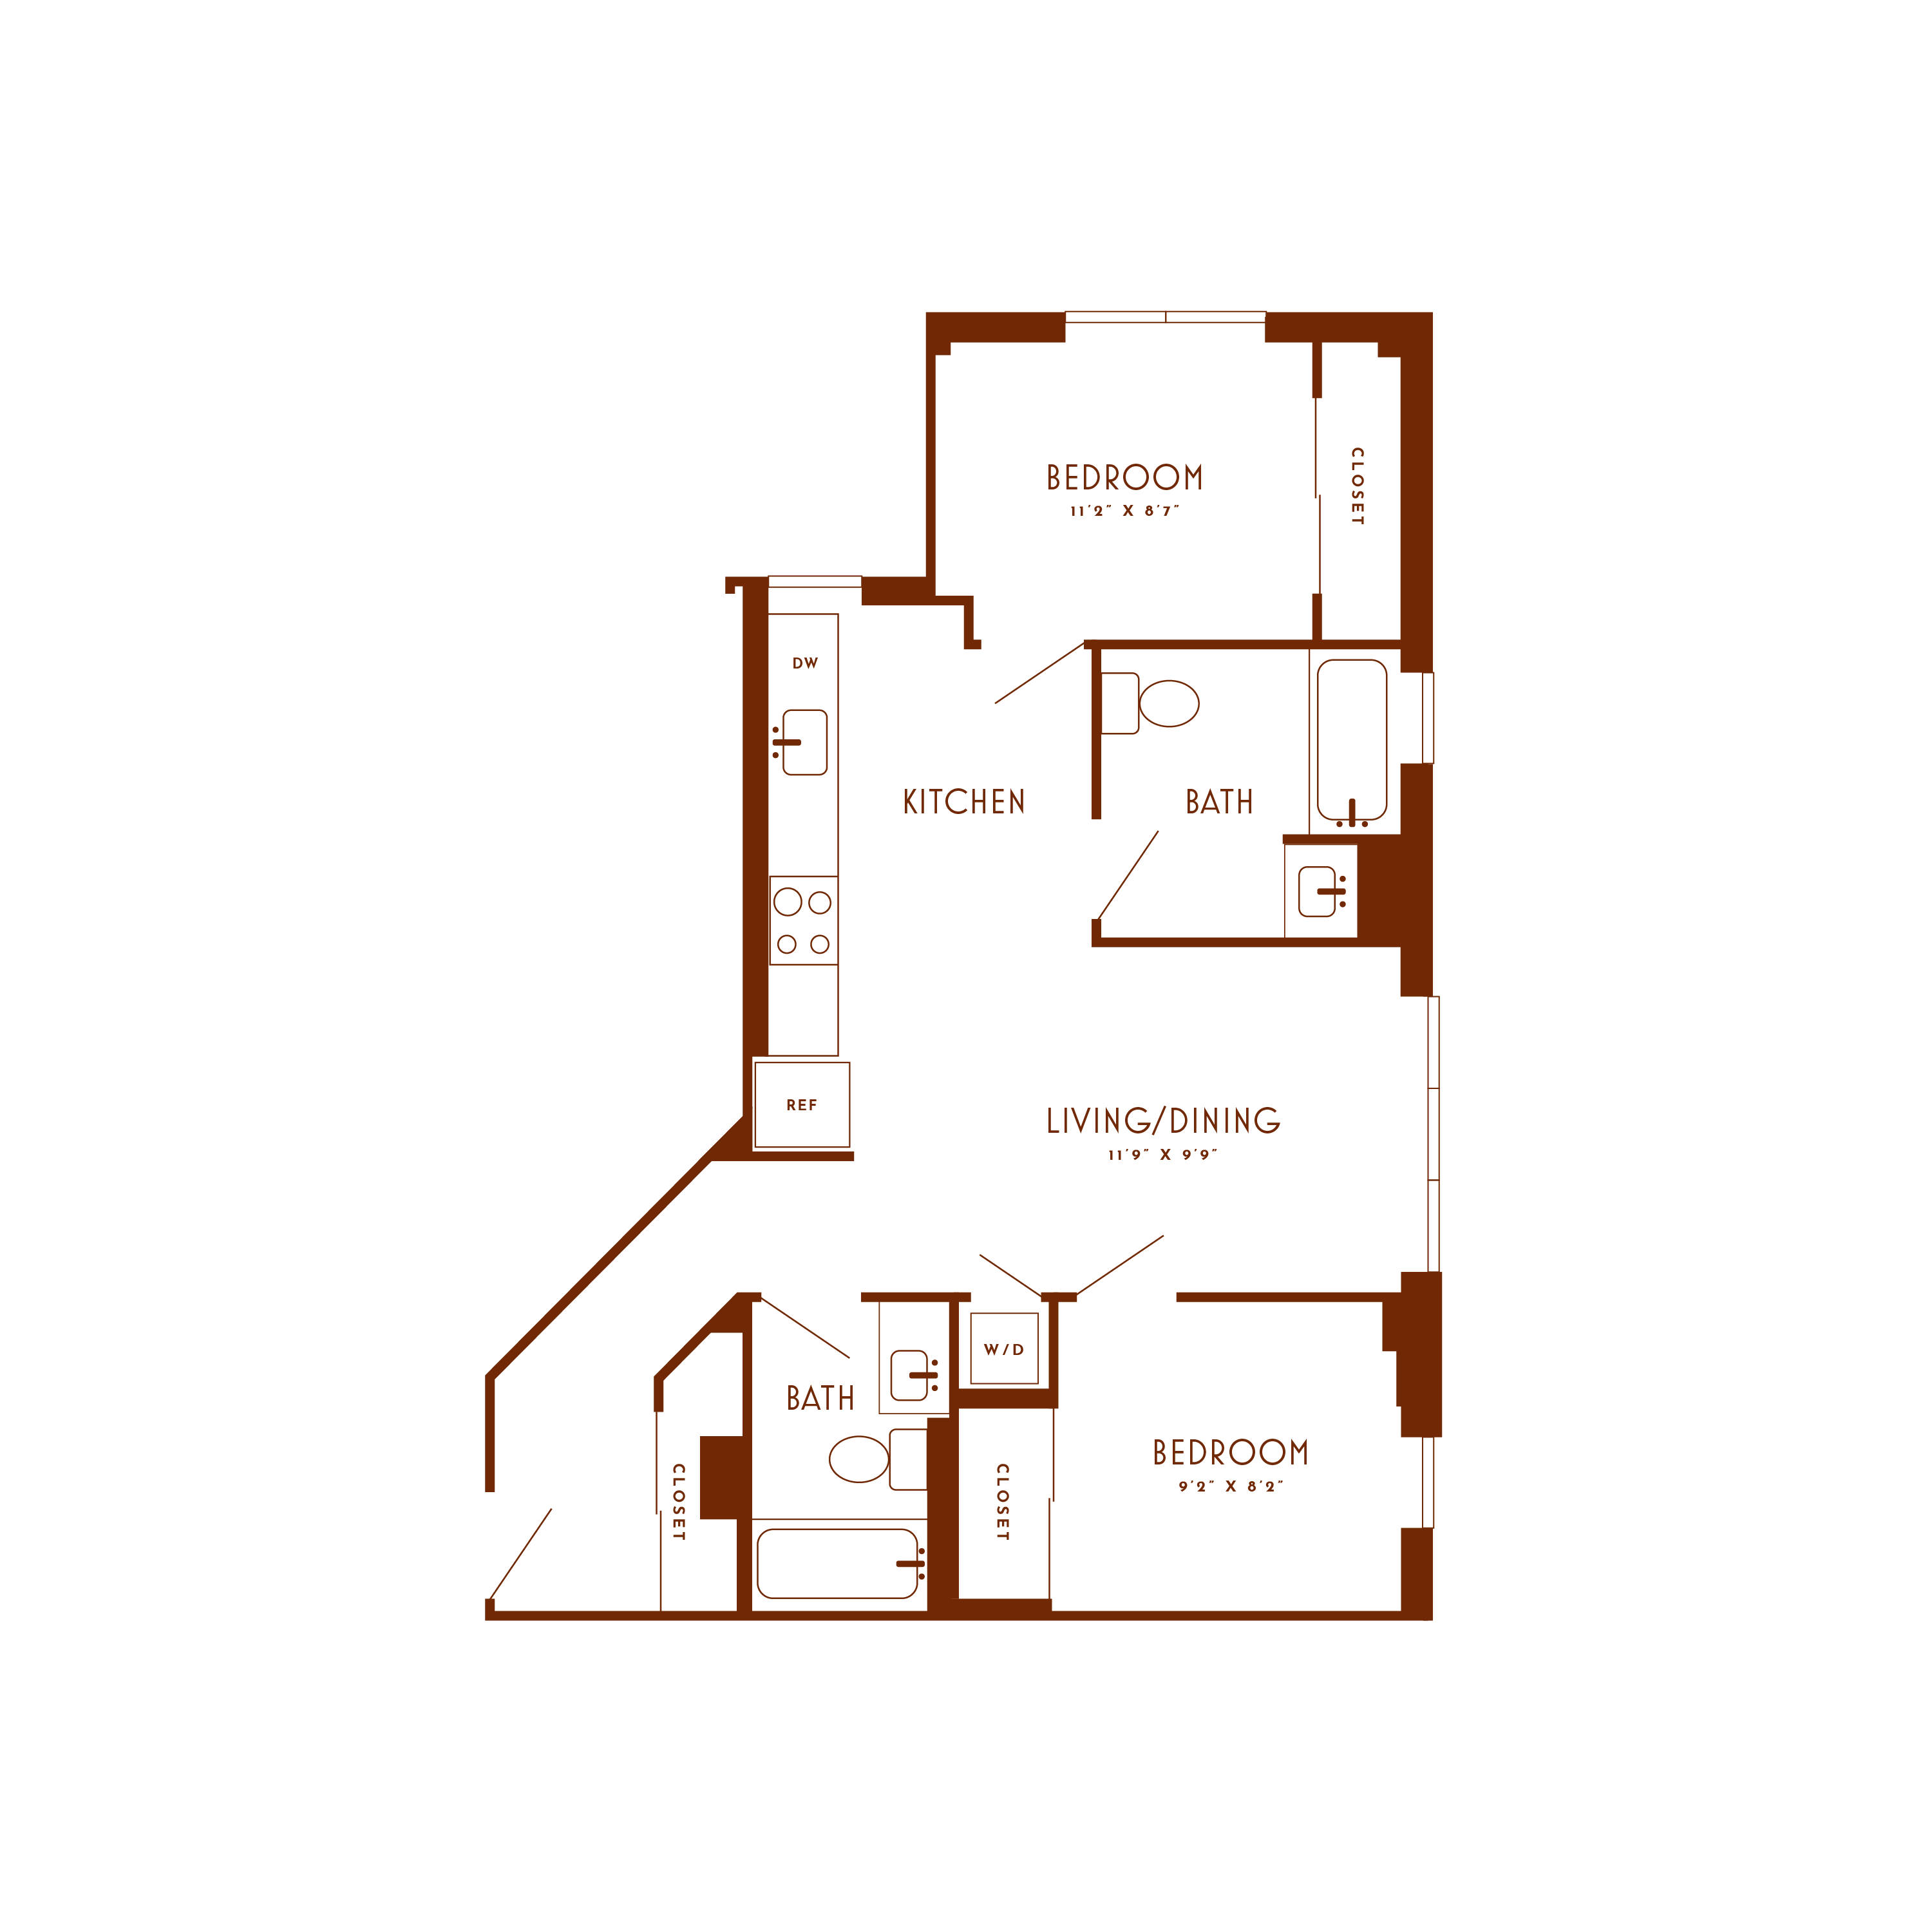 Floor plan image of unit 819